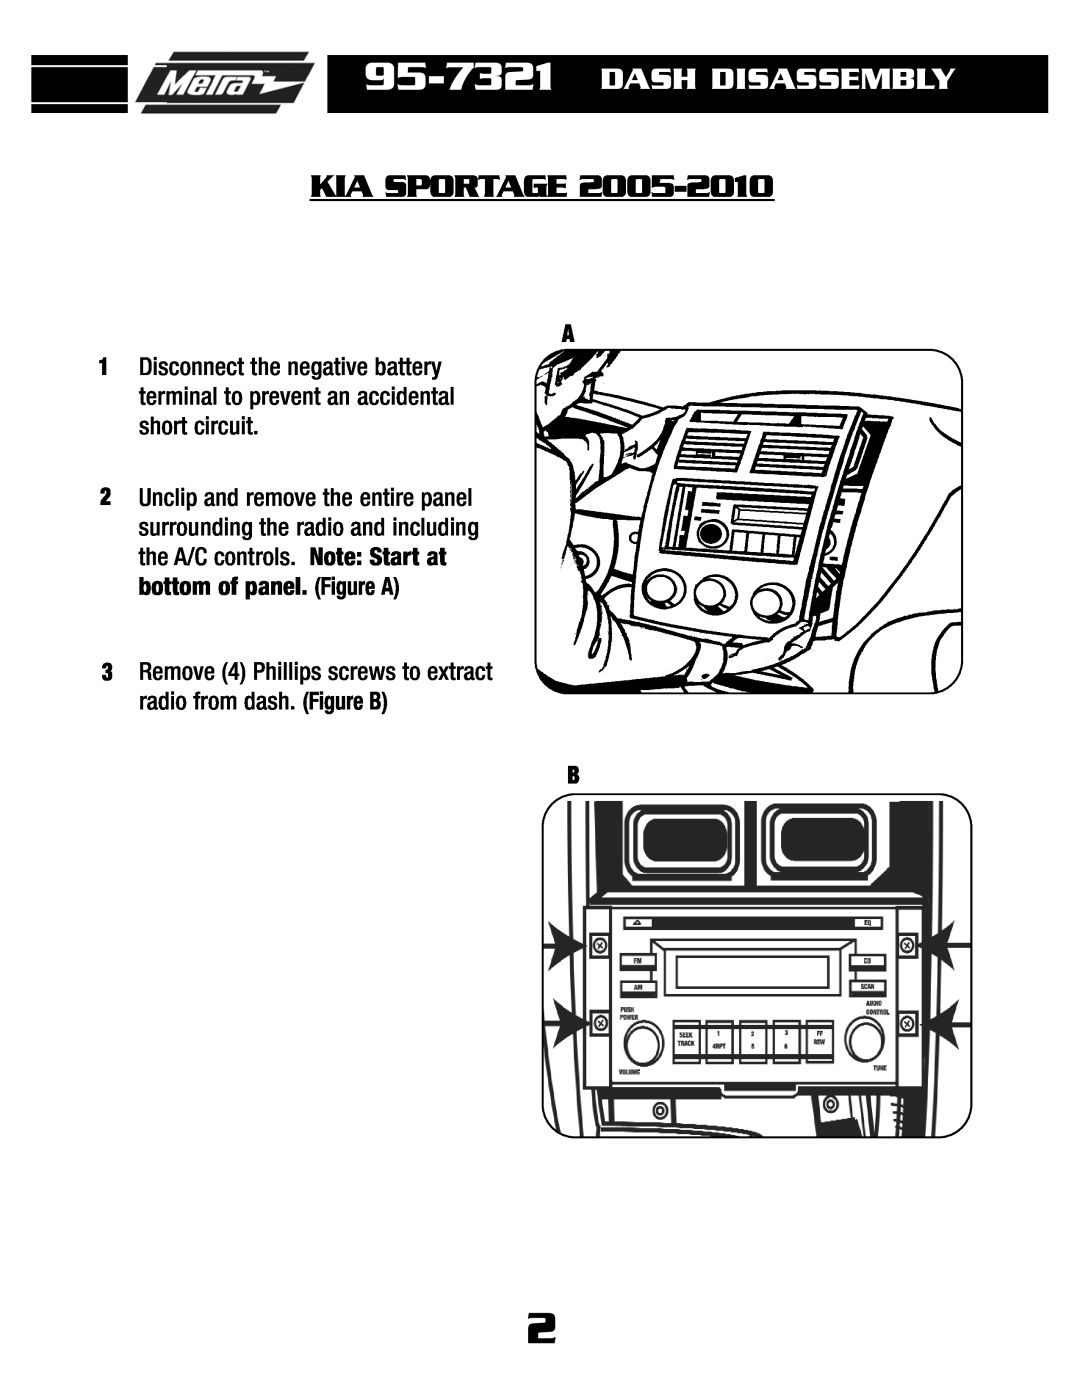 Metra Electronics 95-7321 installation instructions Kia Sportage, Dash Disassembly 